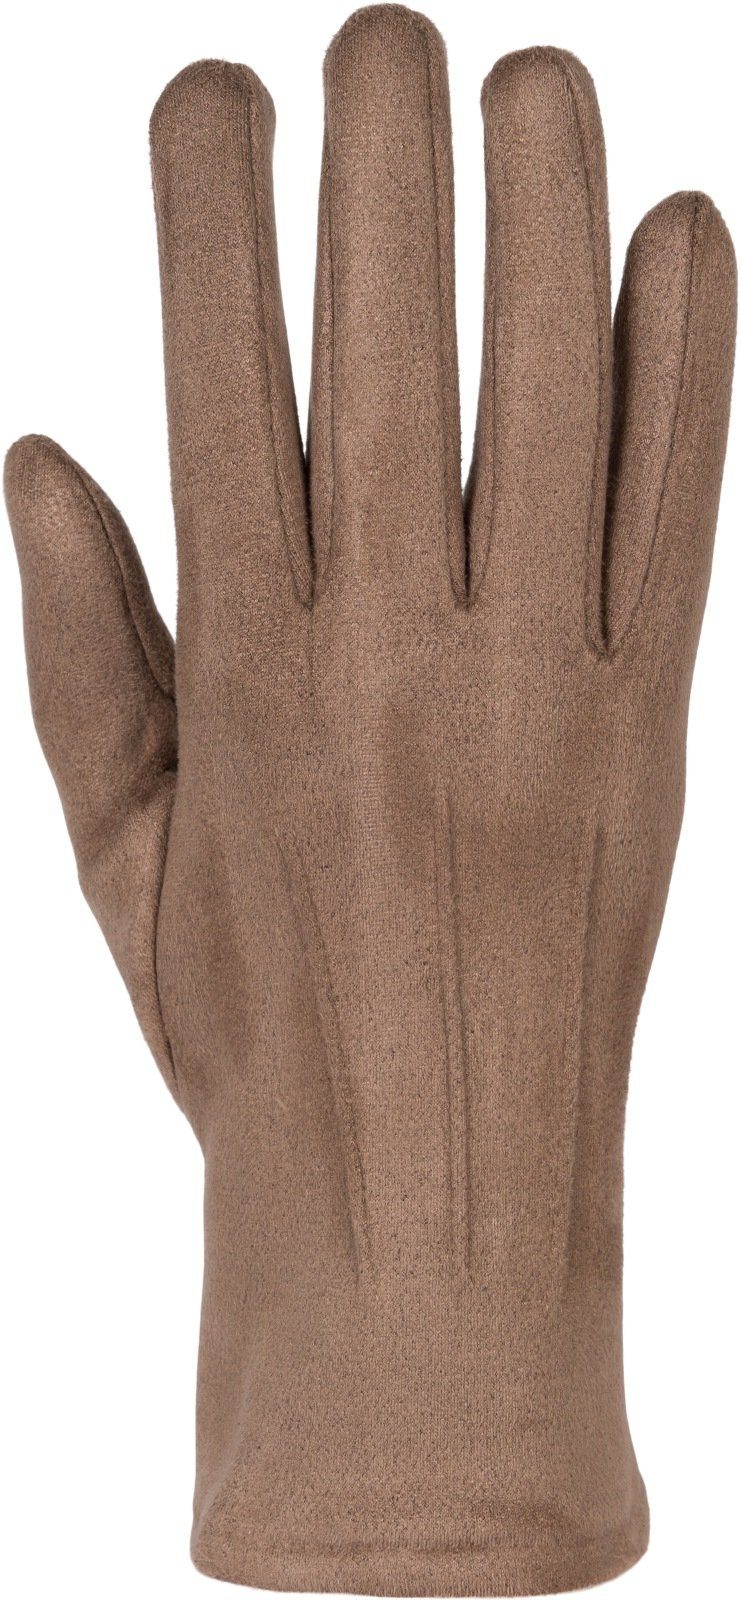 styleBREAKER Ziernähte Einfarbige Fleecehandschuhe Touchscreen Handschuhe Taupe